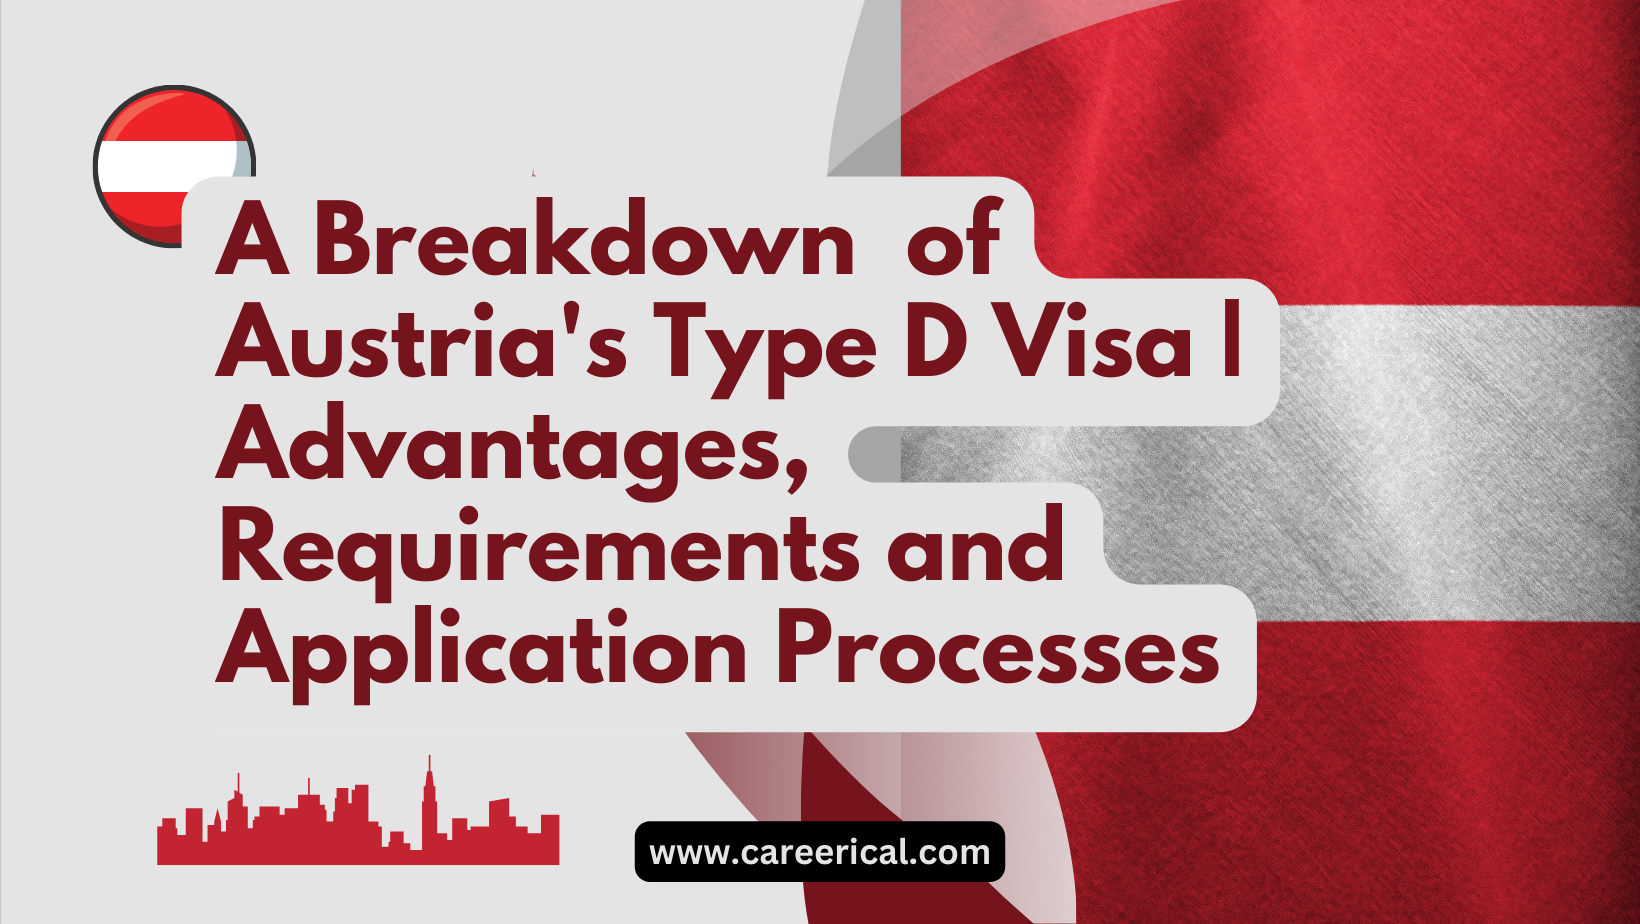 A Breakdown of Austria's Type D Visa Advantages, Requirements and Application Processes